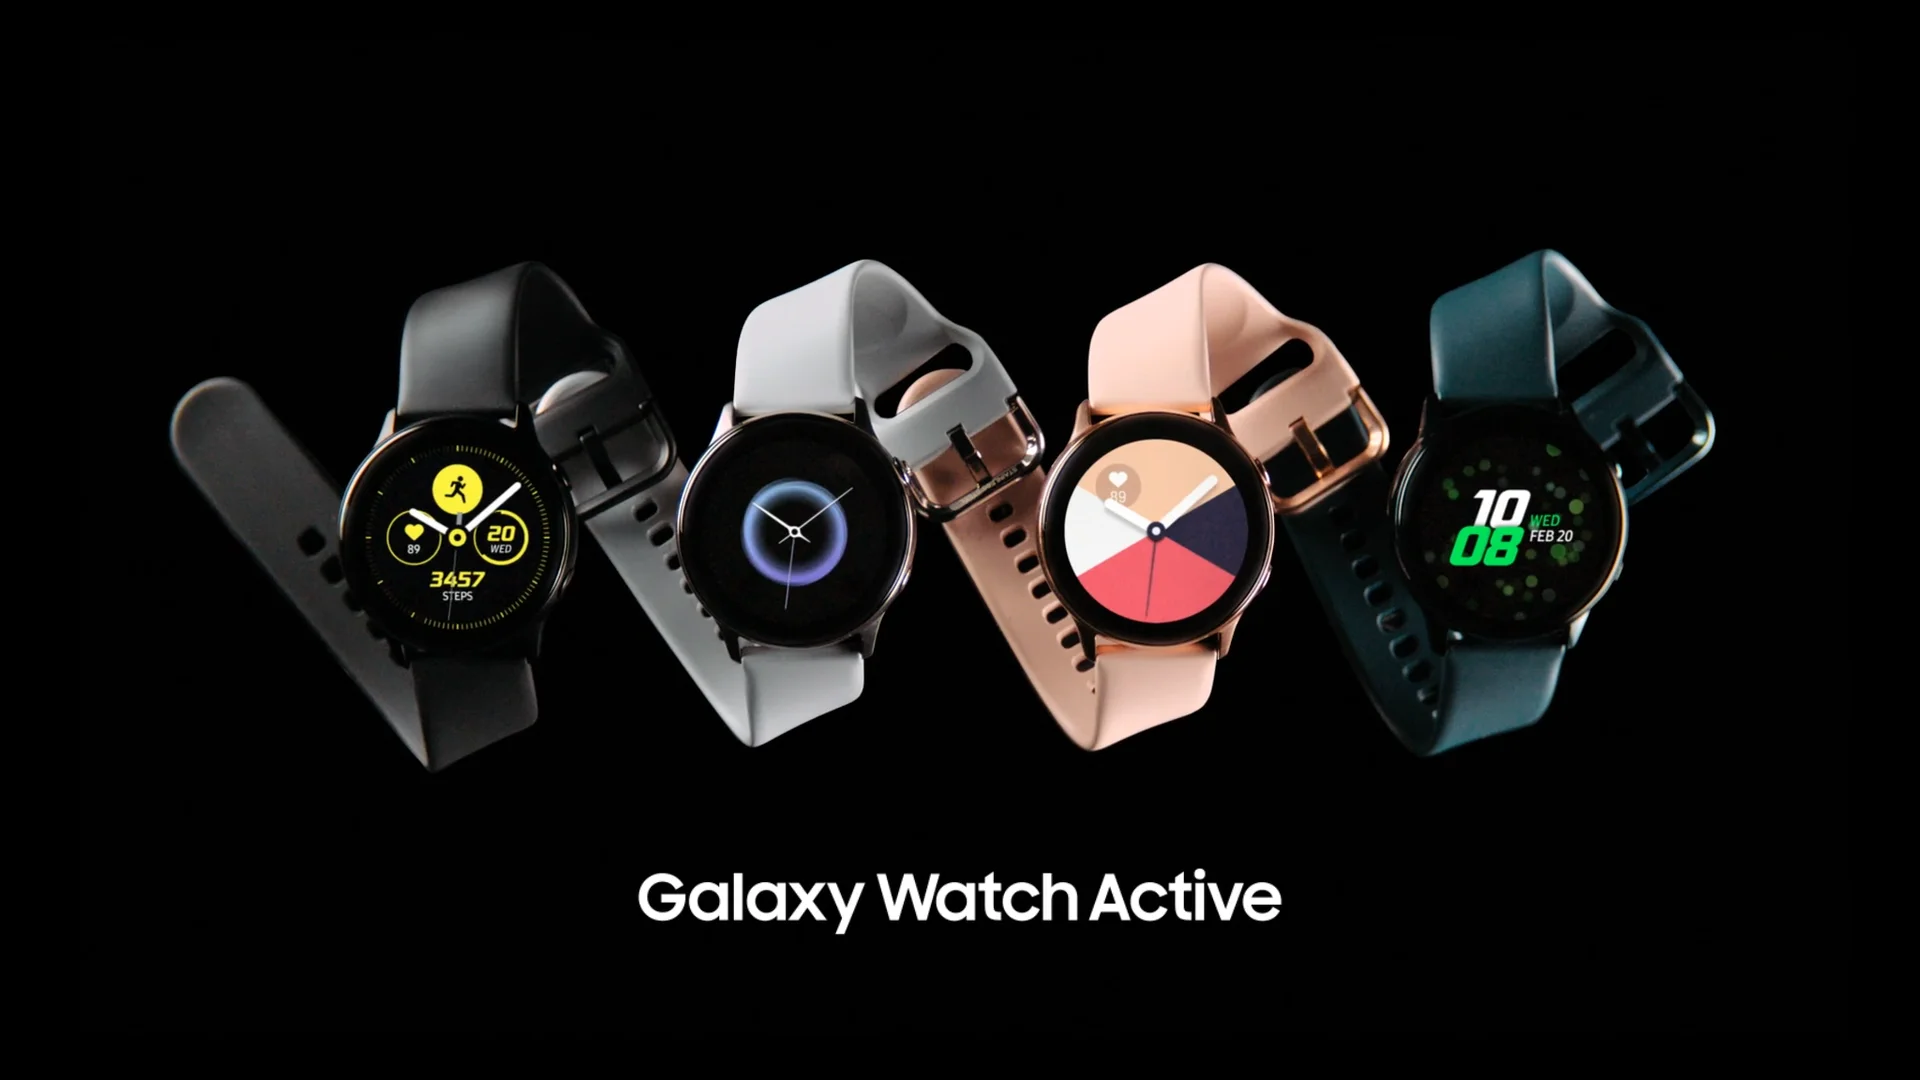 Galaxy Watch Active on Vimeo